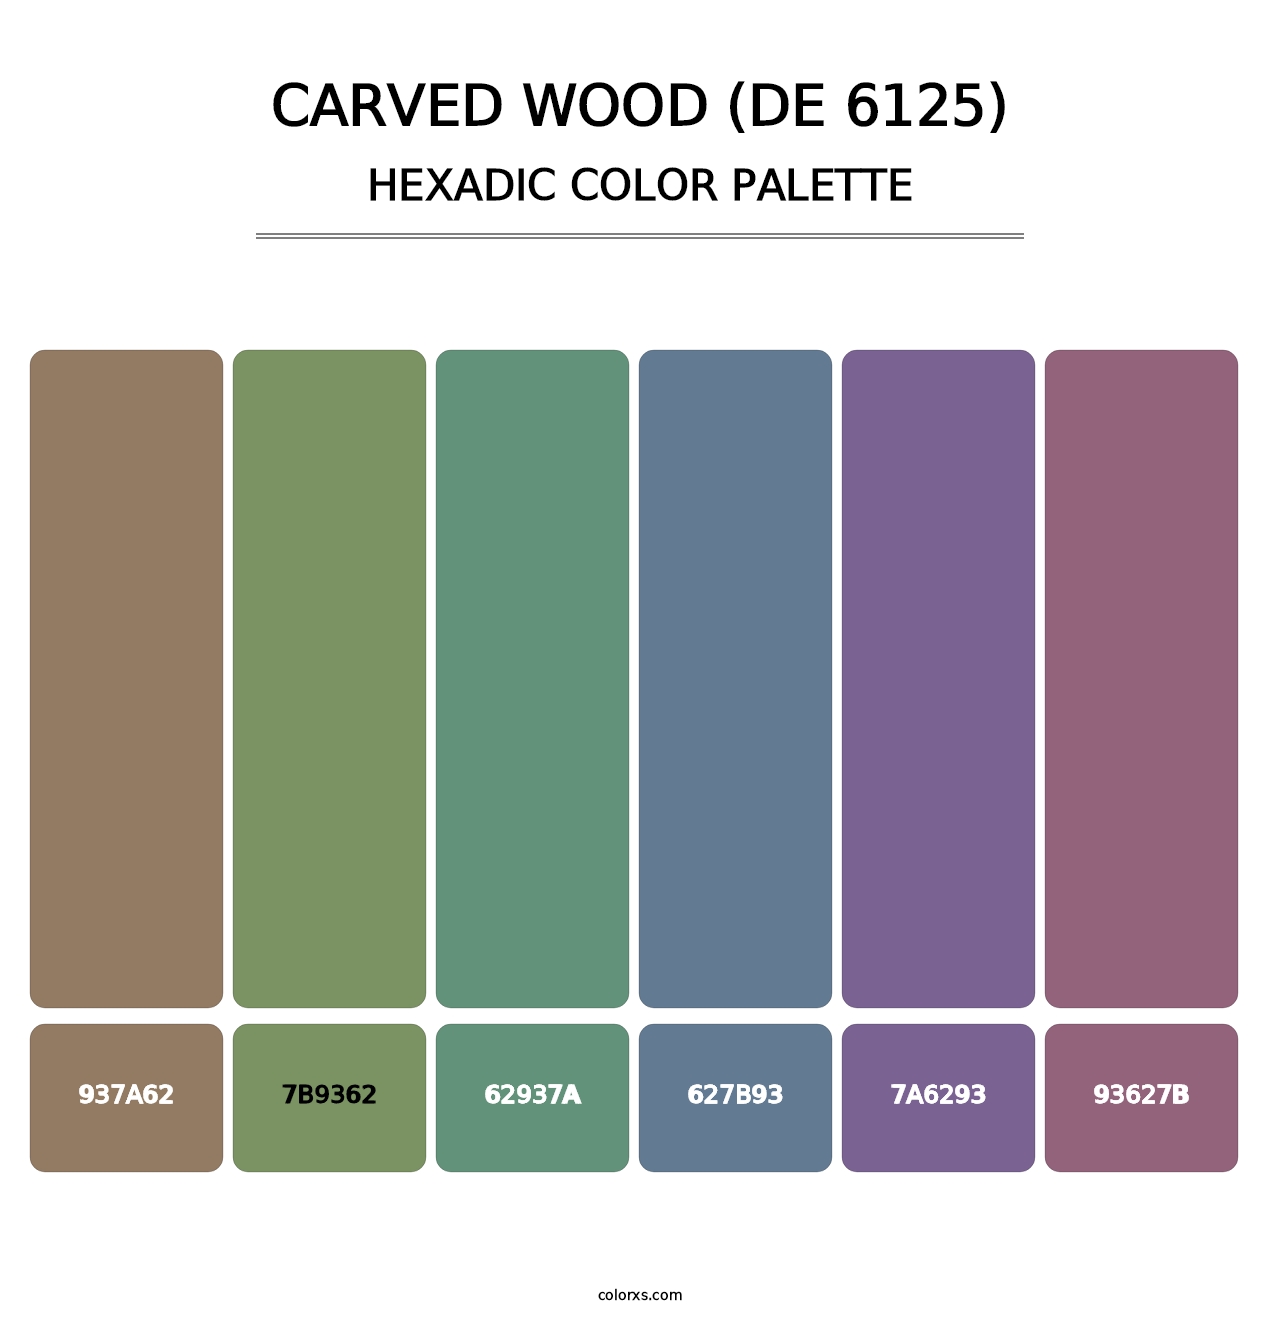 Carved Wood (DE 6125) - Hexadic Color Palette